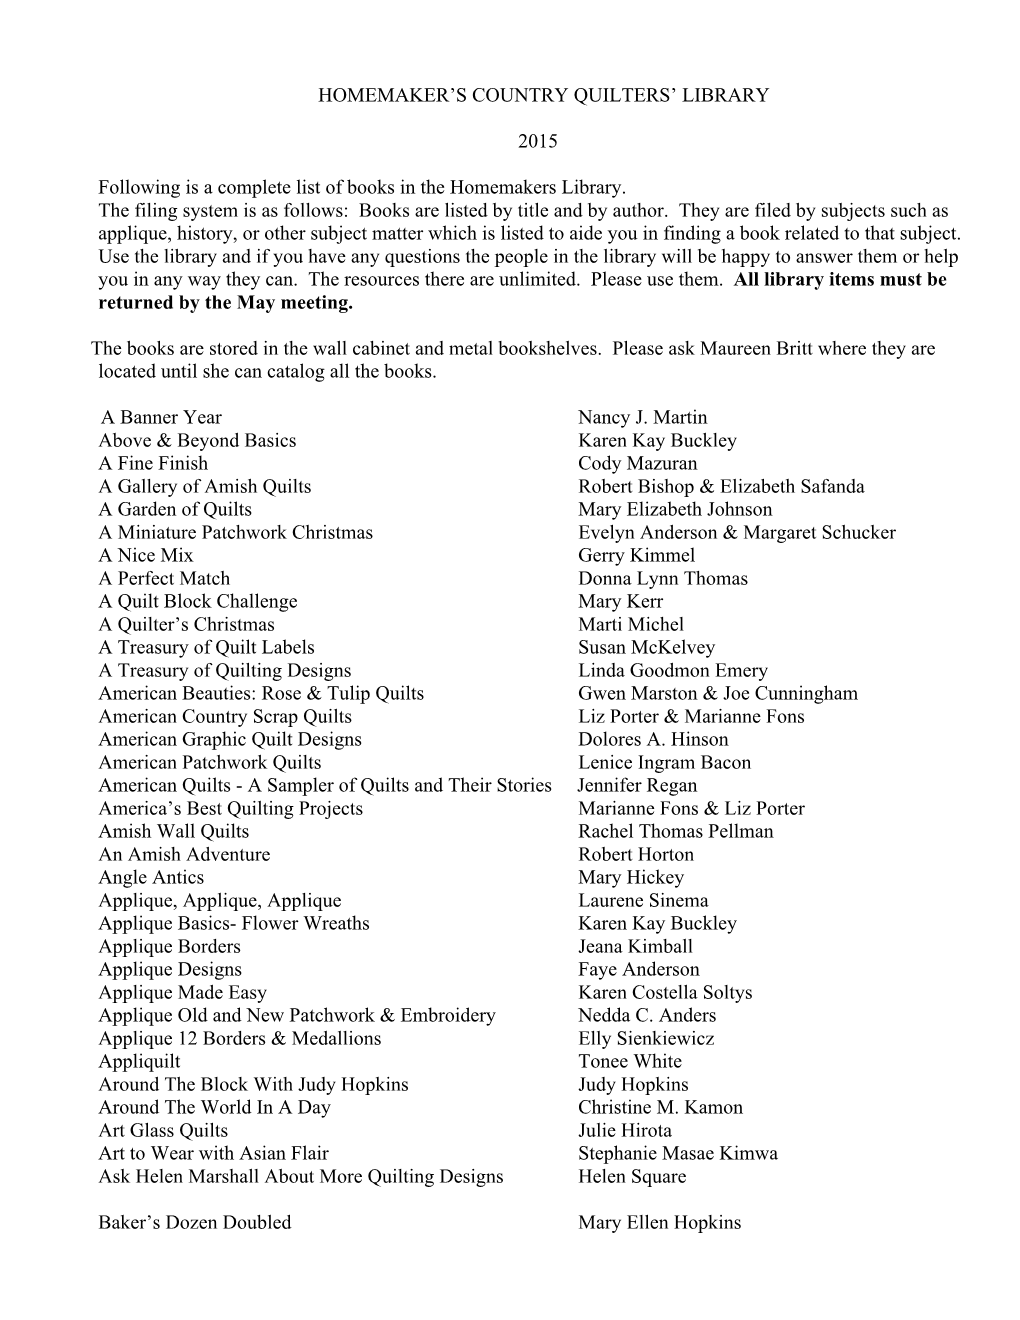 HCQ Library Book List 2015